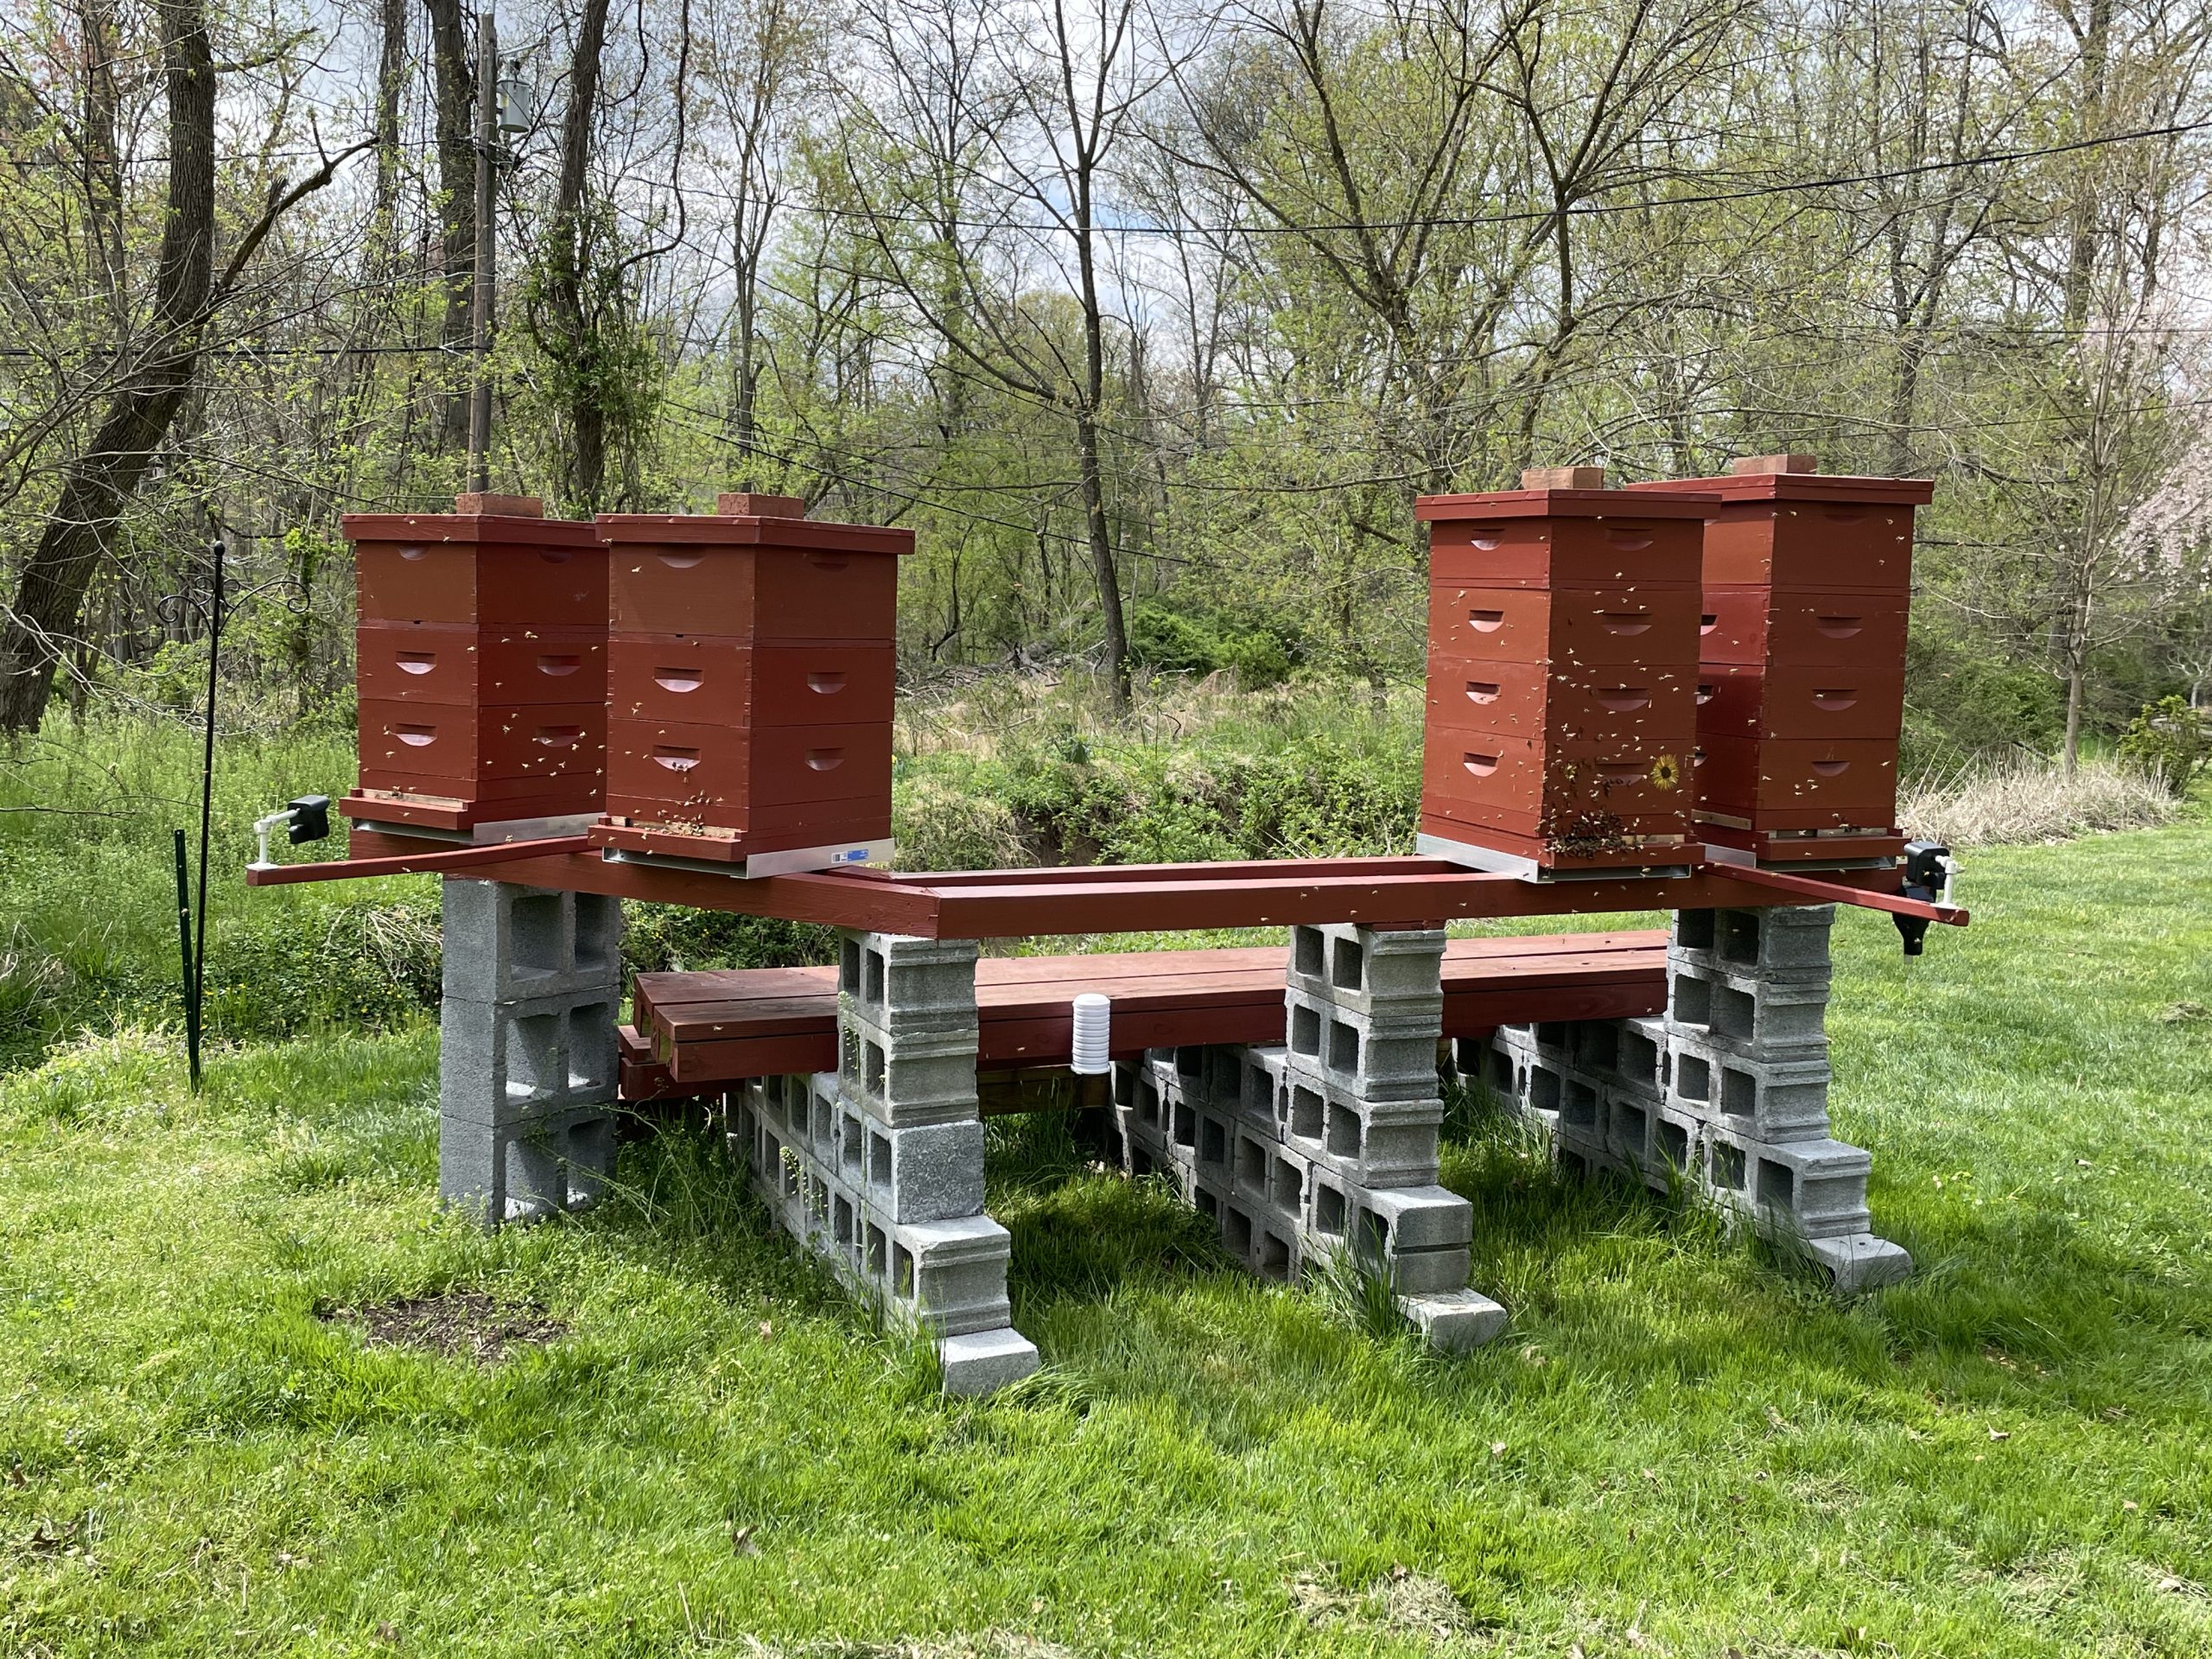 Spring 2021 hive setup